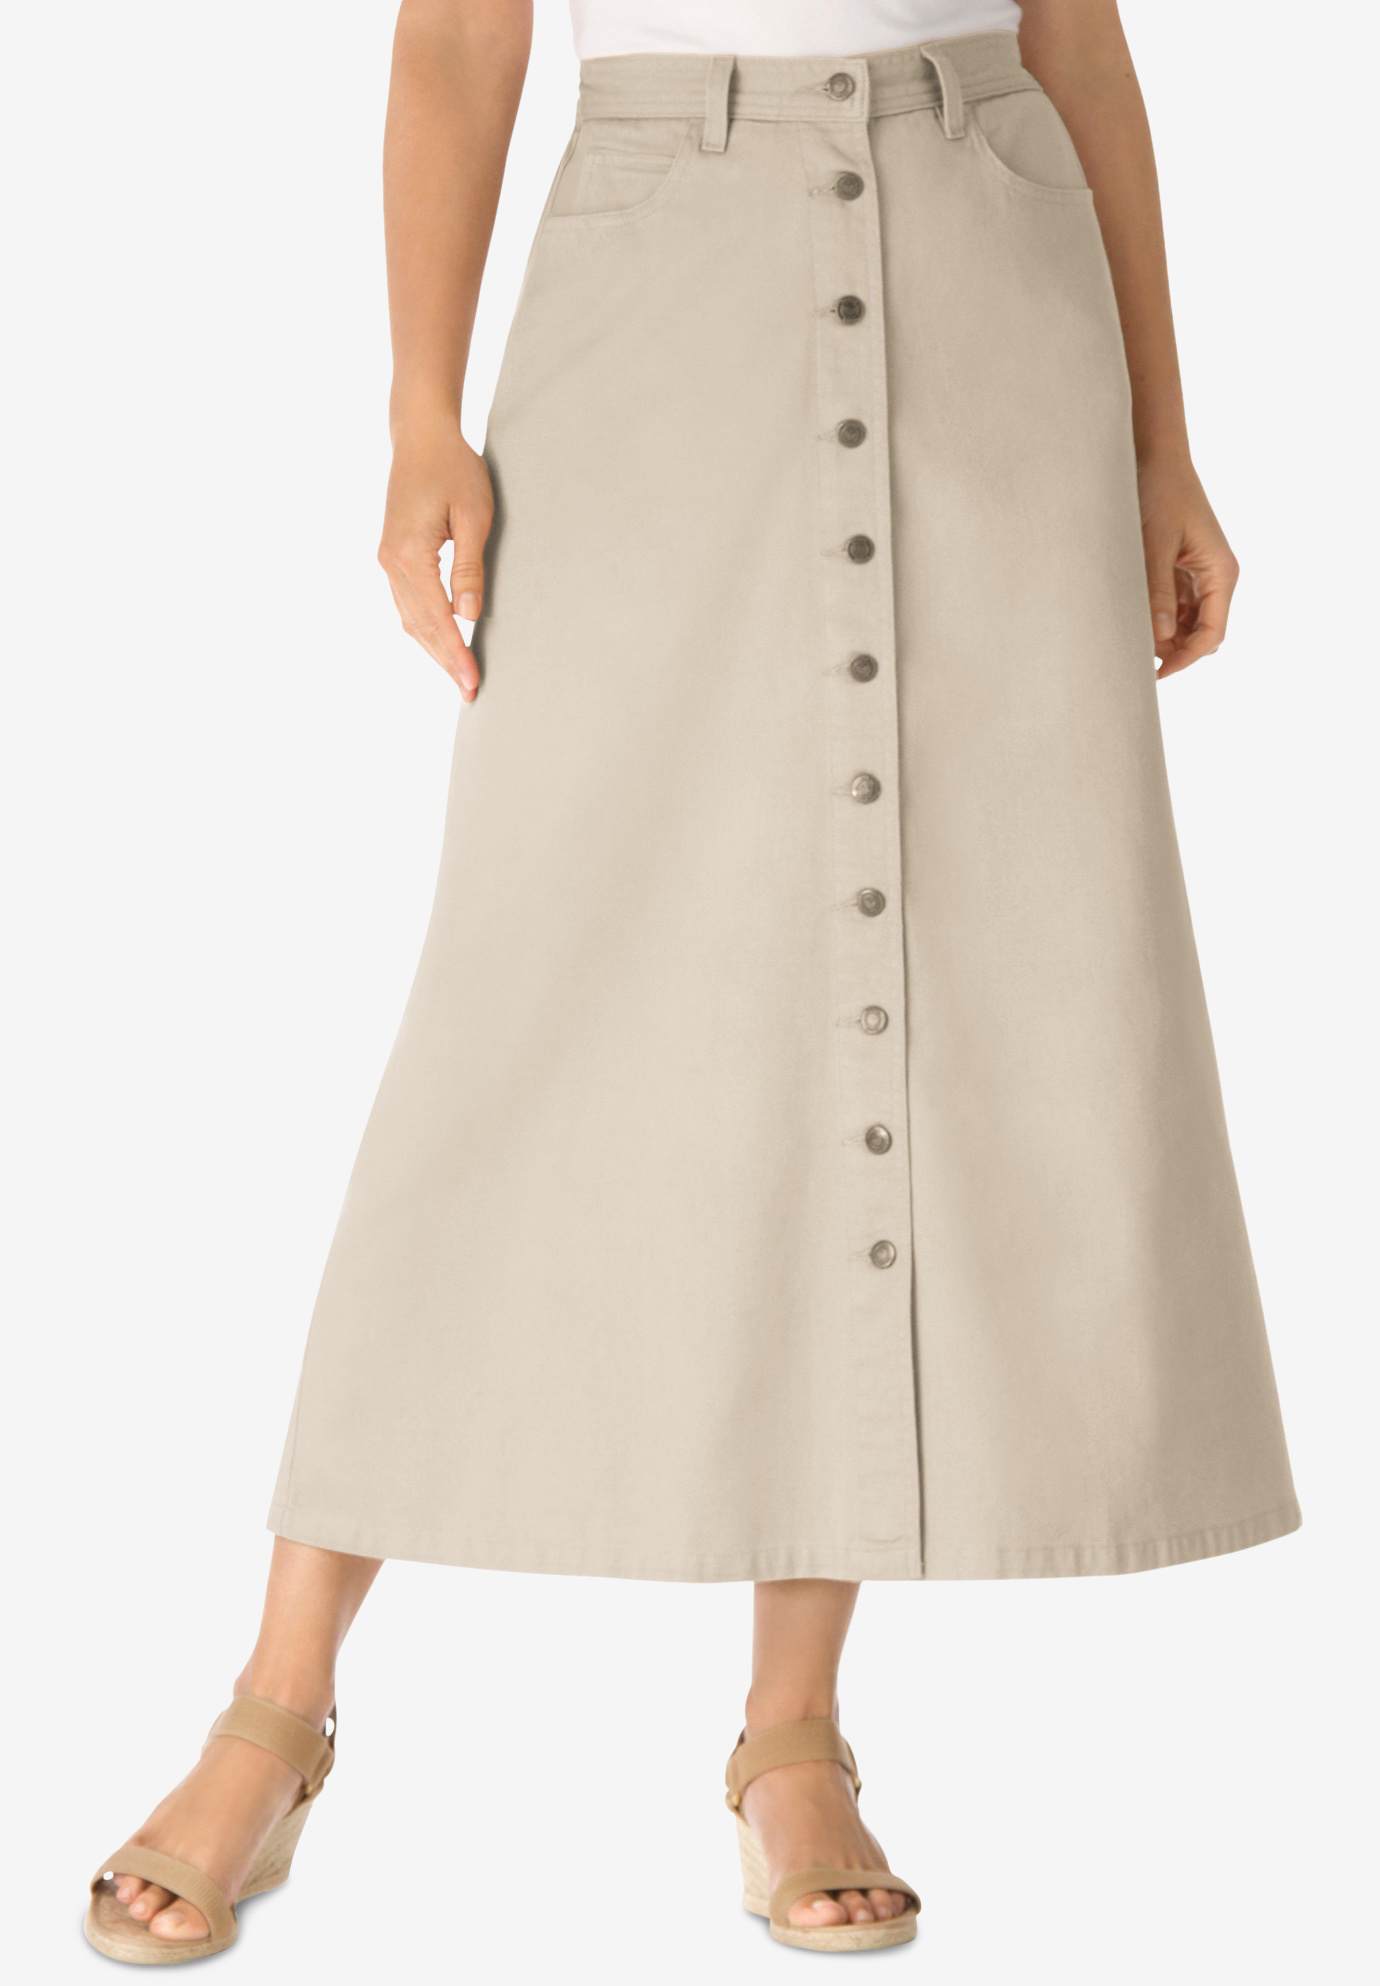 Women Clothing A-Line Long Non Stretch Cotton Denim Skirt 21A S M L XL 2X 3X 4X 